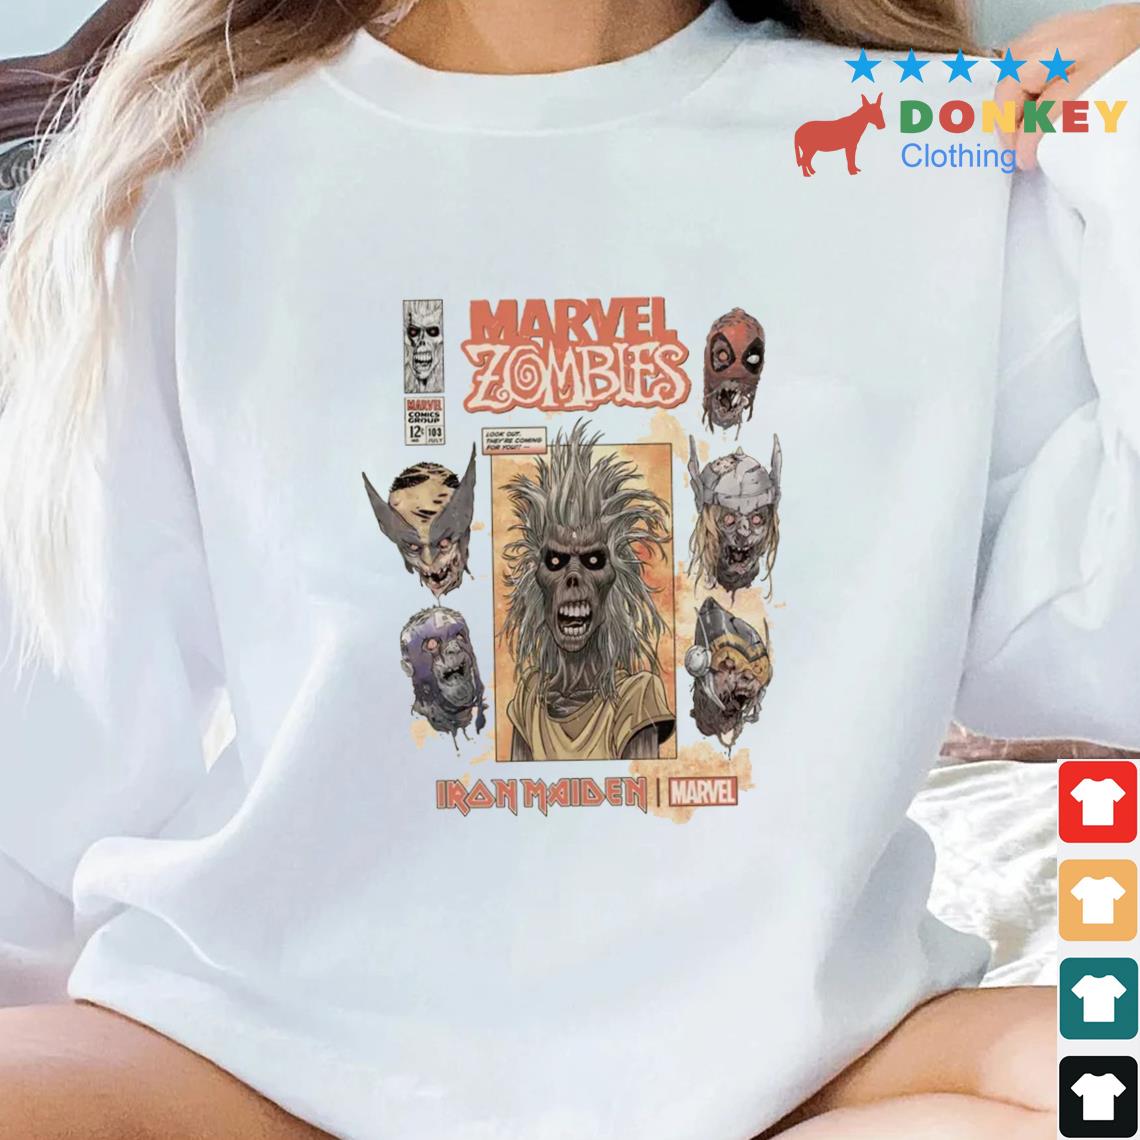 Iron Maiden x Marvel Zombies Shirt